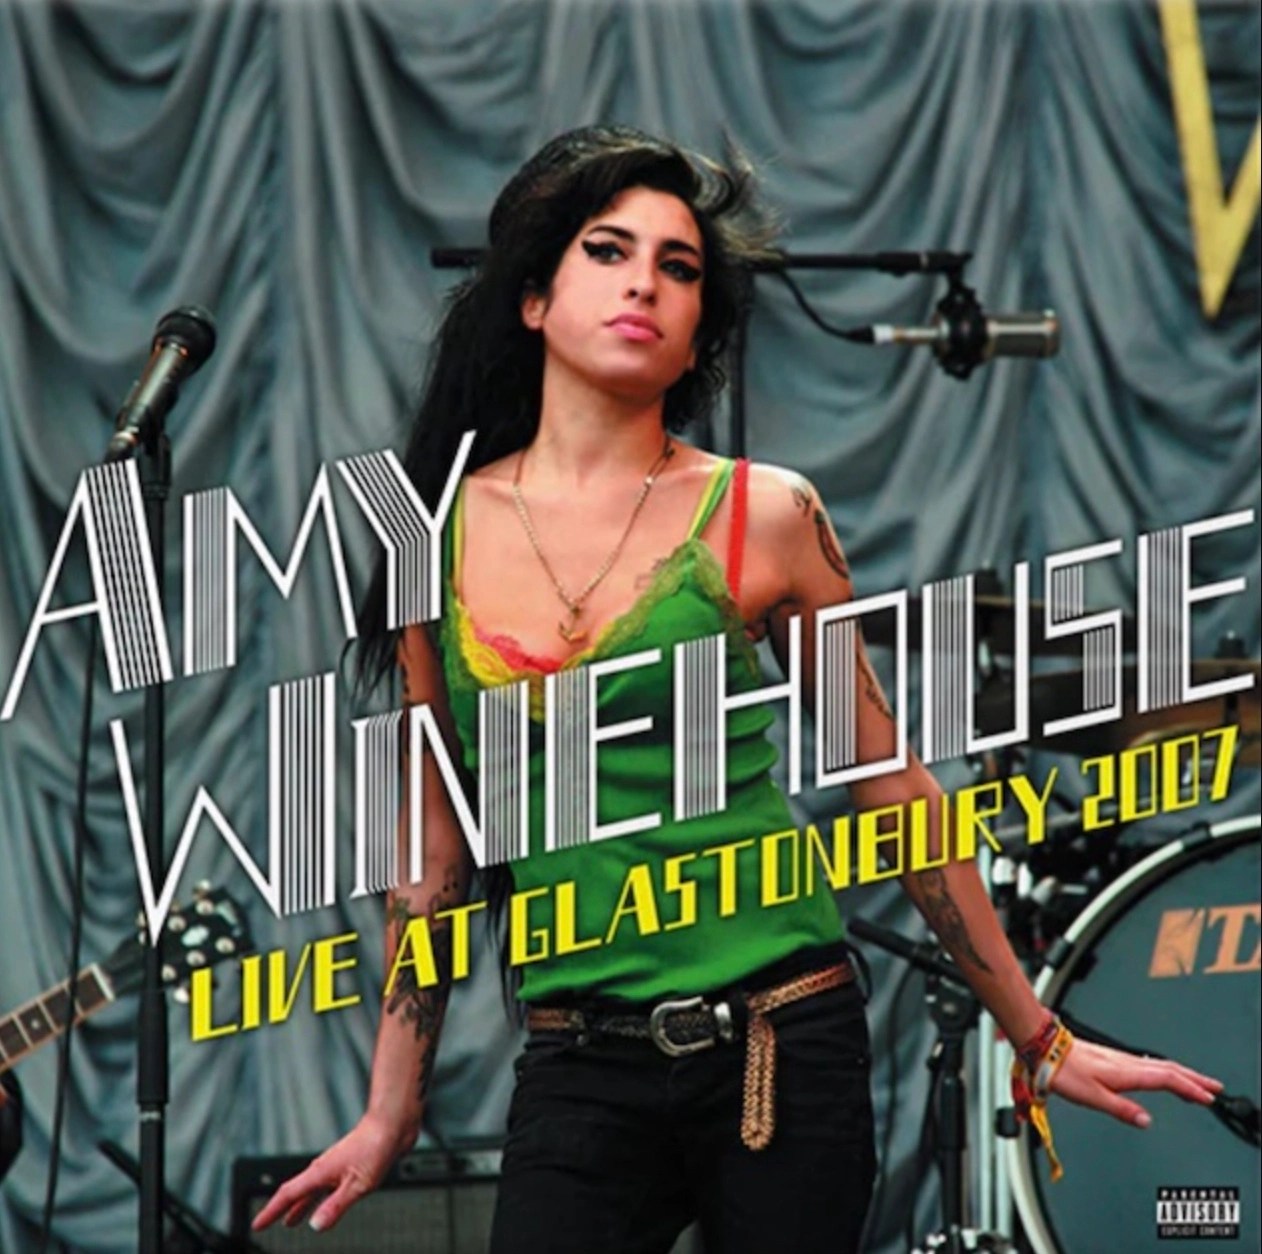 Amy Winehouse Live At Glastonbury